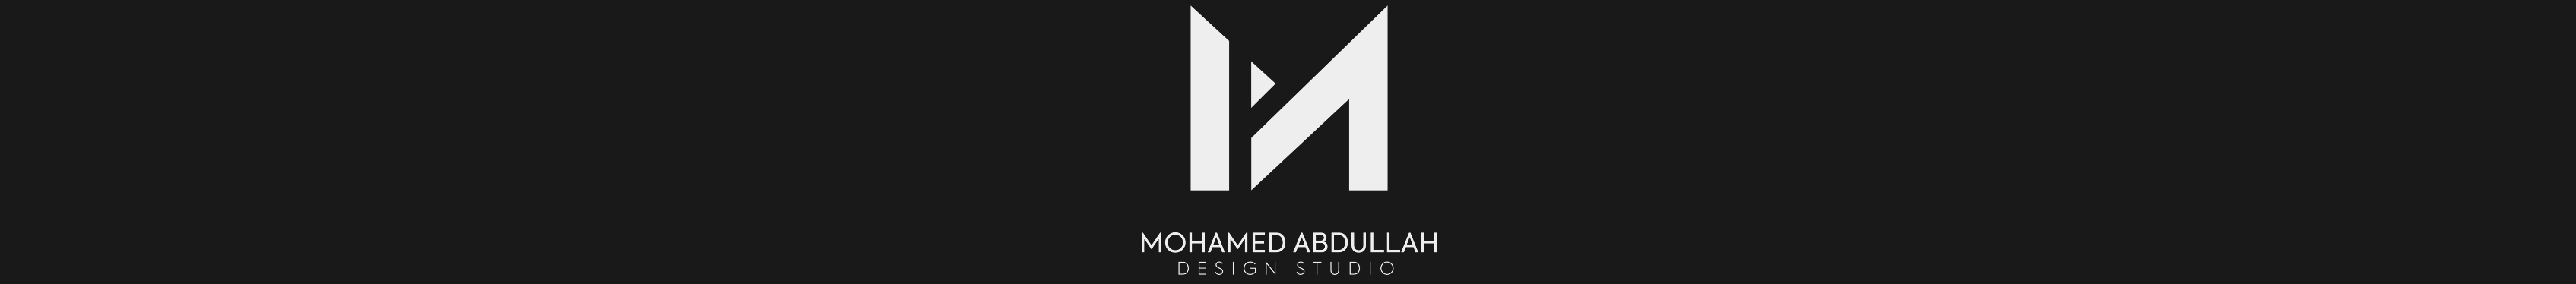 Muhammed Abdallah のプロファイルバナー